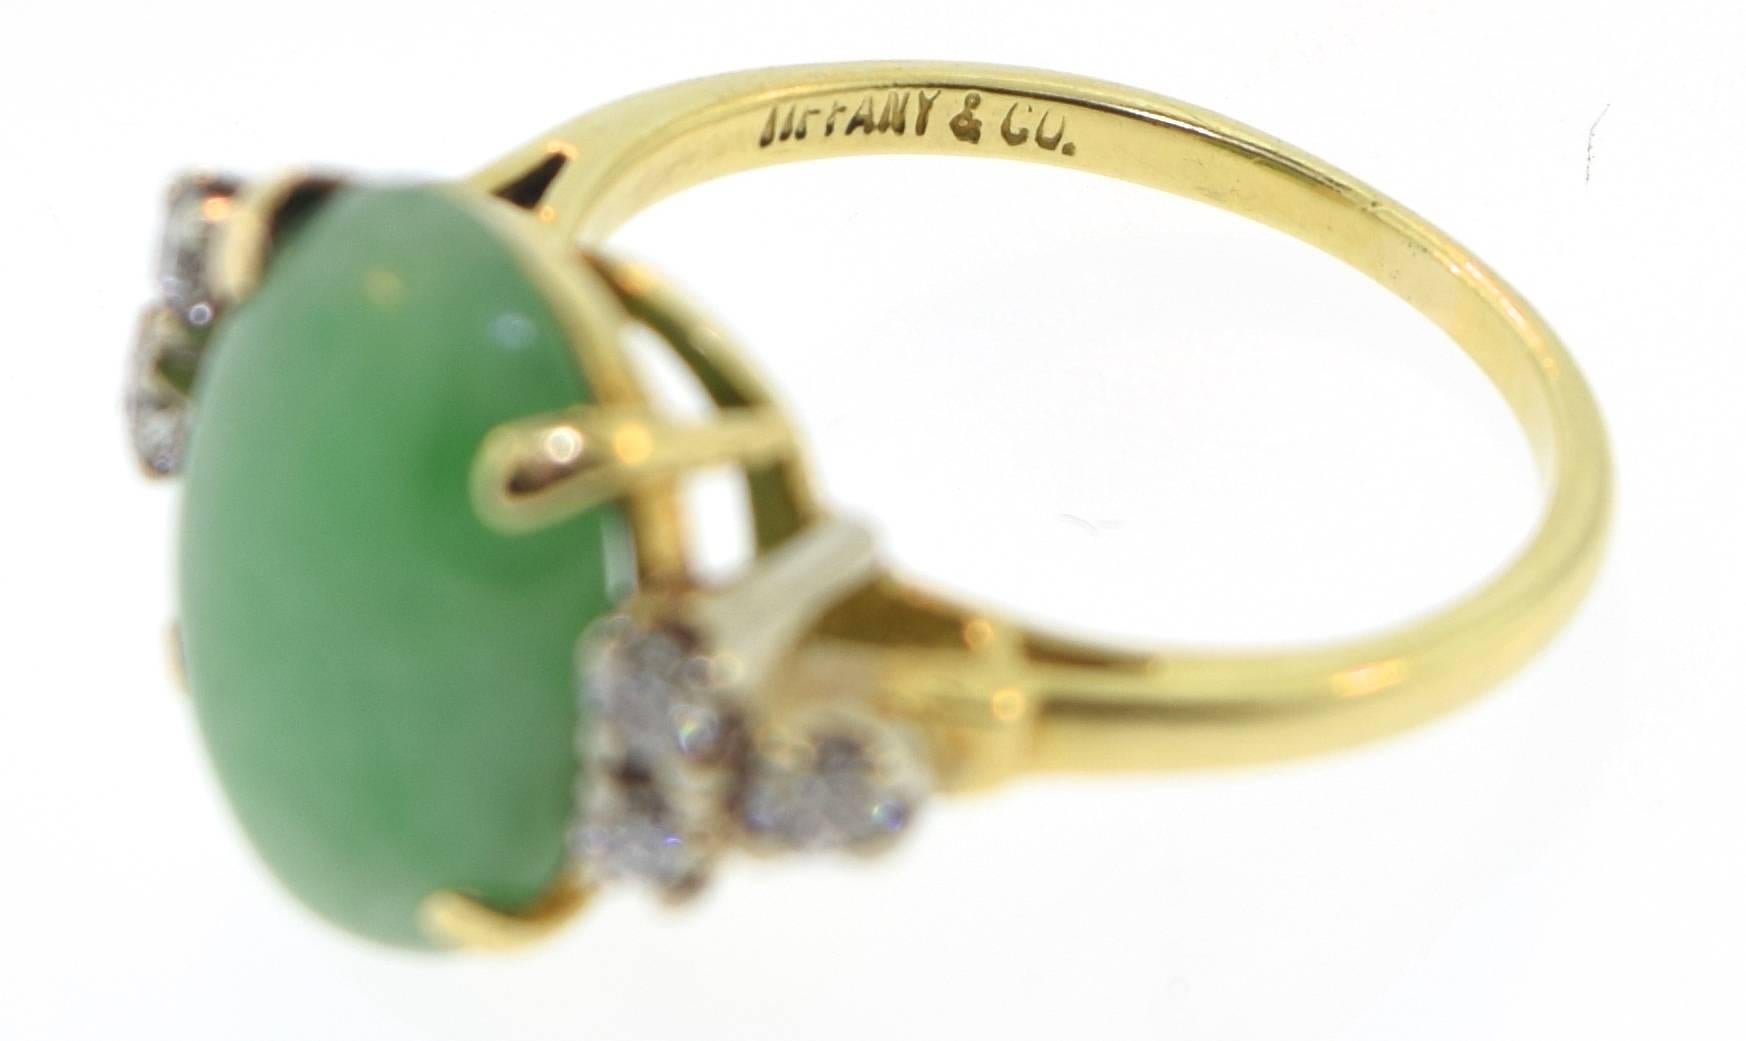 Beautiful Tiffany & Co. jade ring with diamonds. 
Metal: 18k Yellow Gold
Stones: Jade and Diamonds
Weight: 5.1g
Ring Size: 6.25 - 6.50
Hallmark: Tiffany & Co., 18K